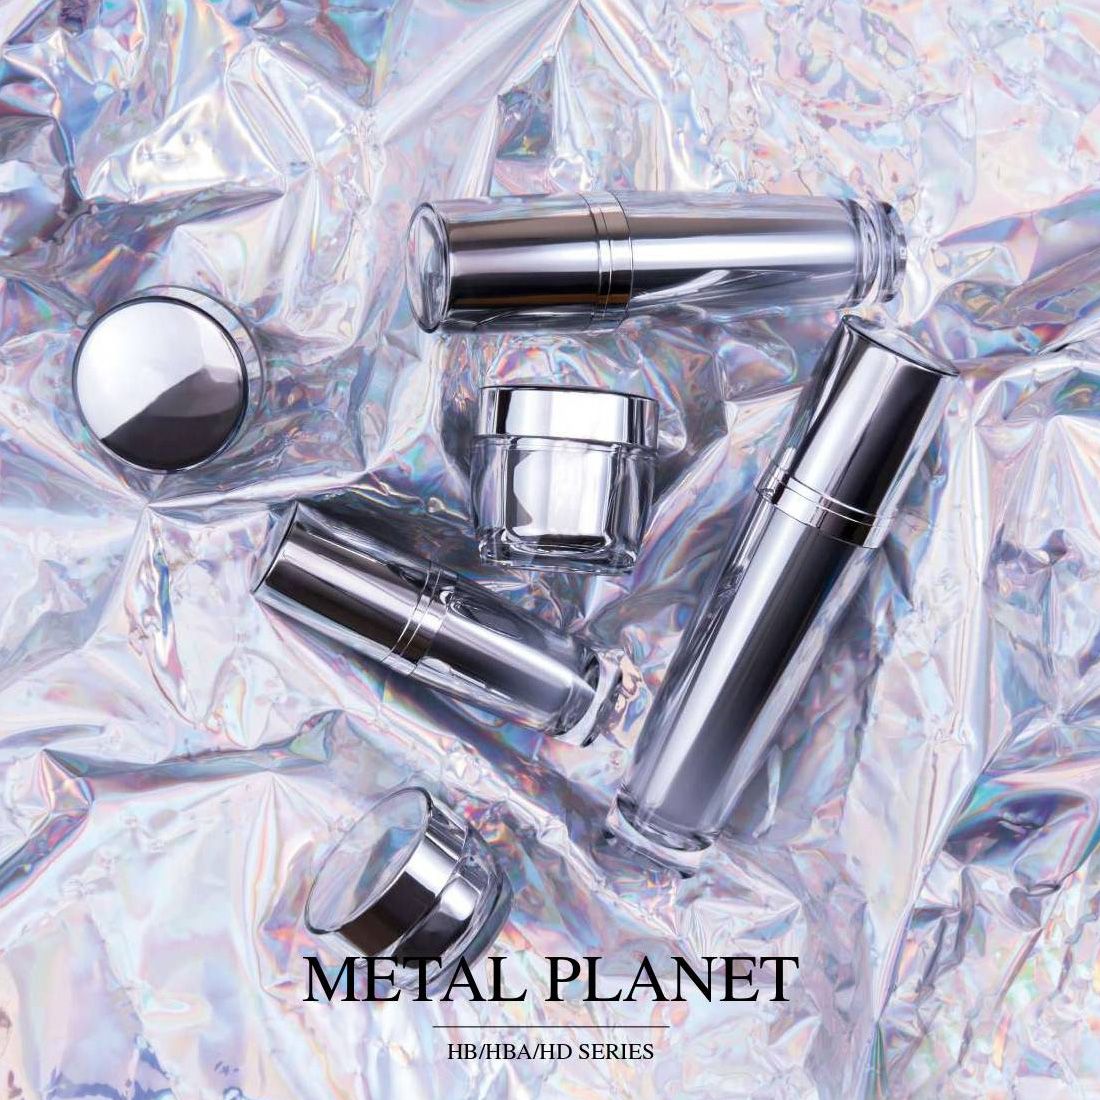 Metal Planet (Acrylic Luxury Cosmetic & Skincare Packaging) - HB / HBA / HD Series